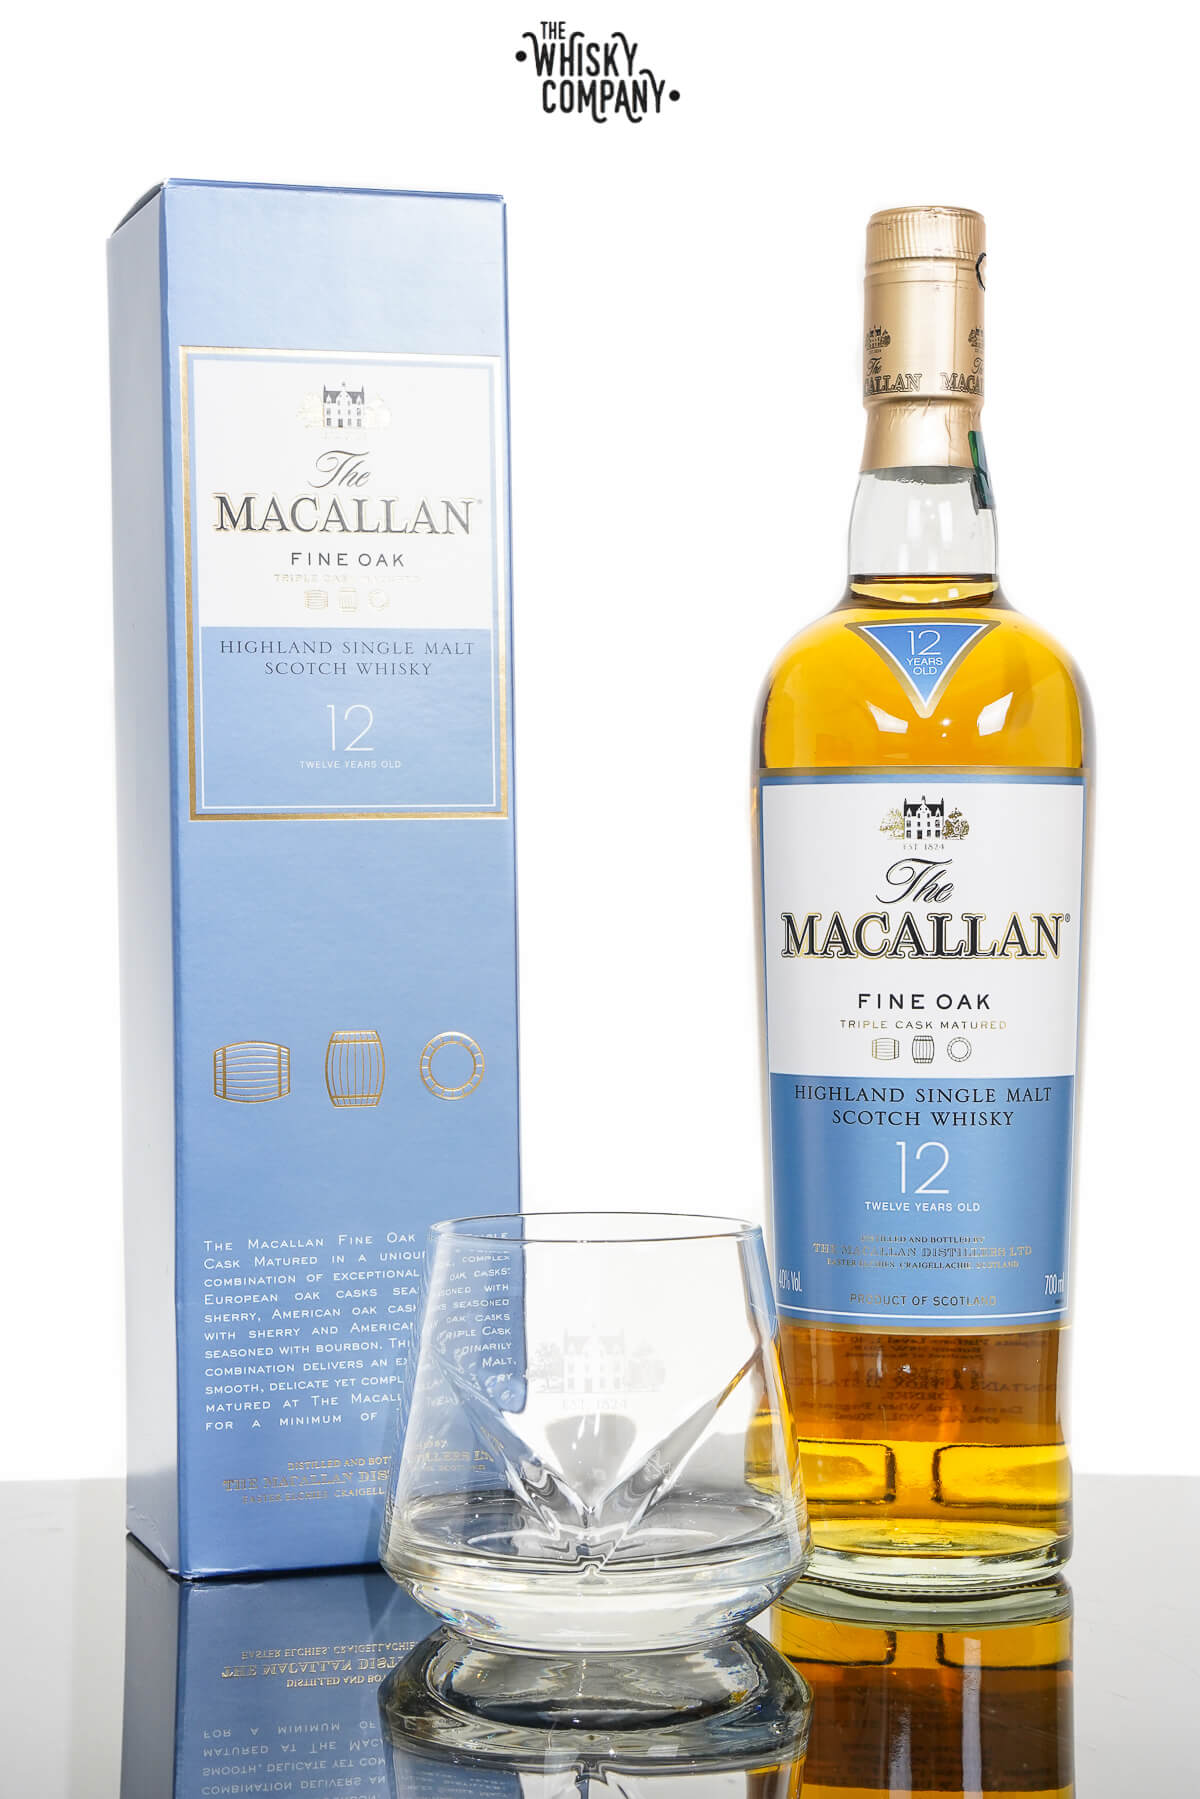 The Macallan Fine Oak 12 Years Old Single Malt Scotch Whisky